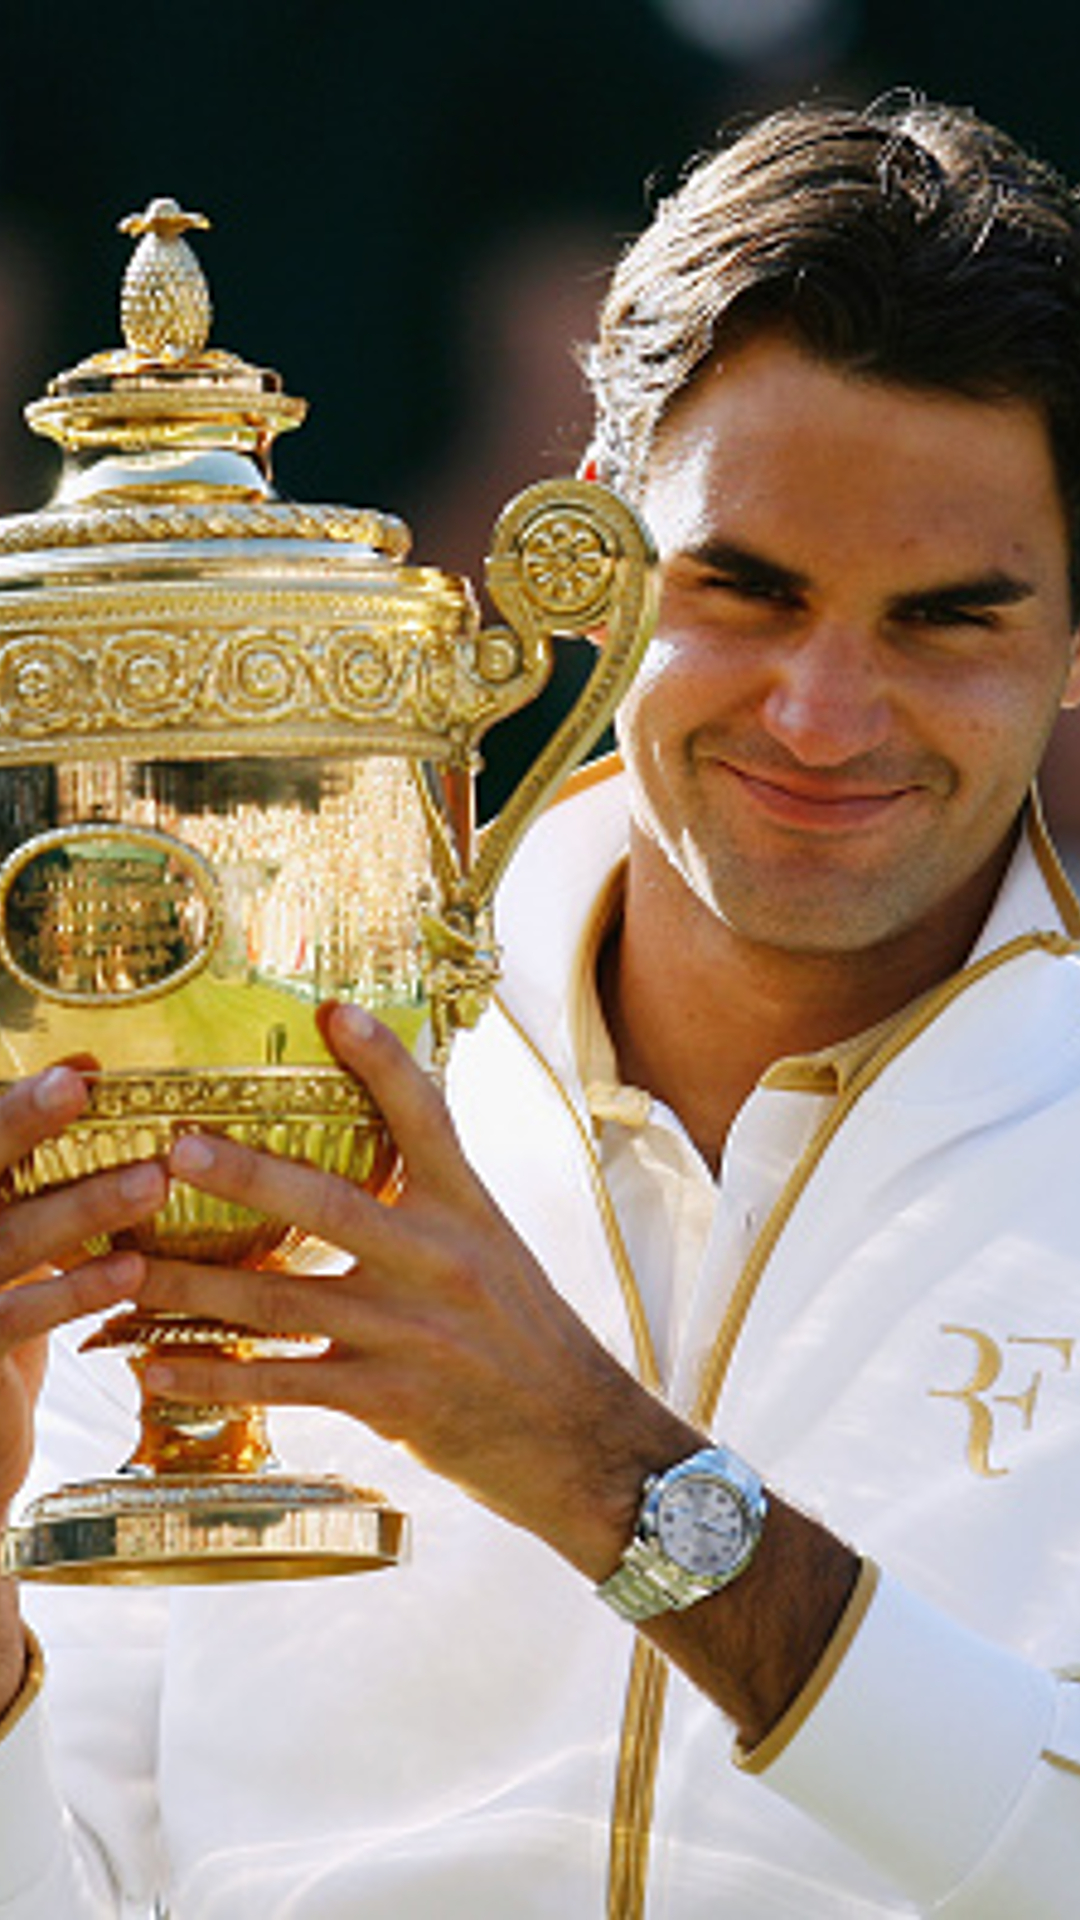 Roger Federer's Career Highlights